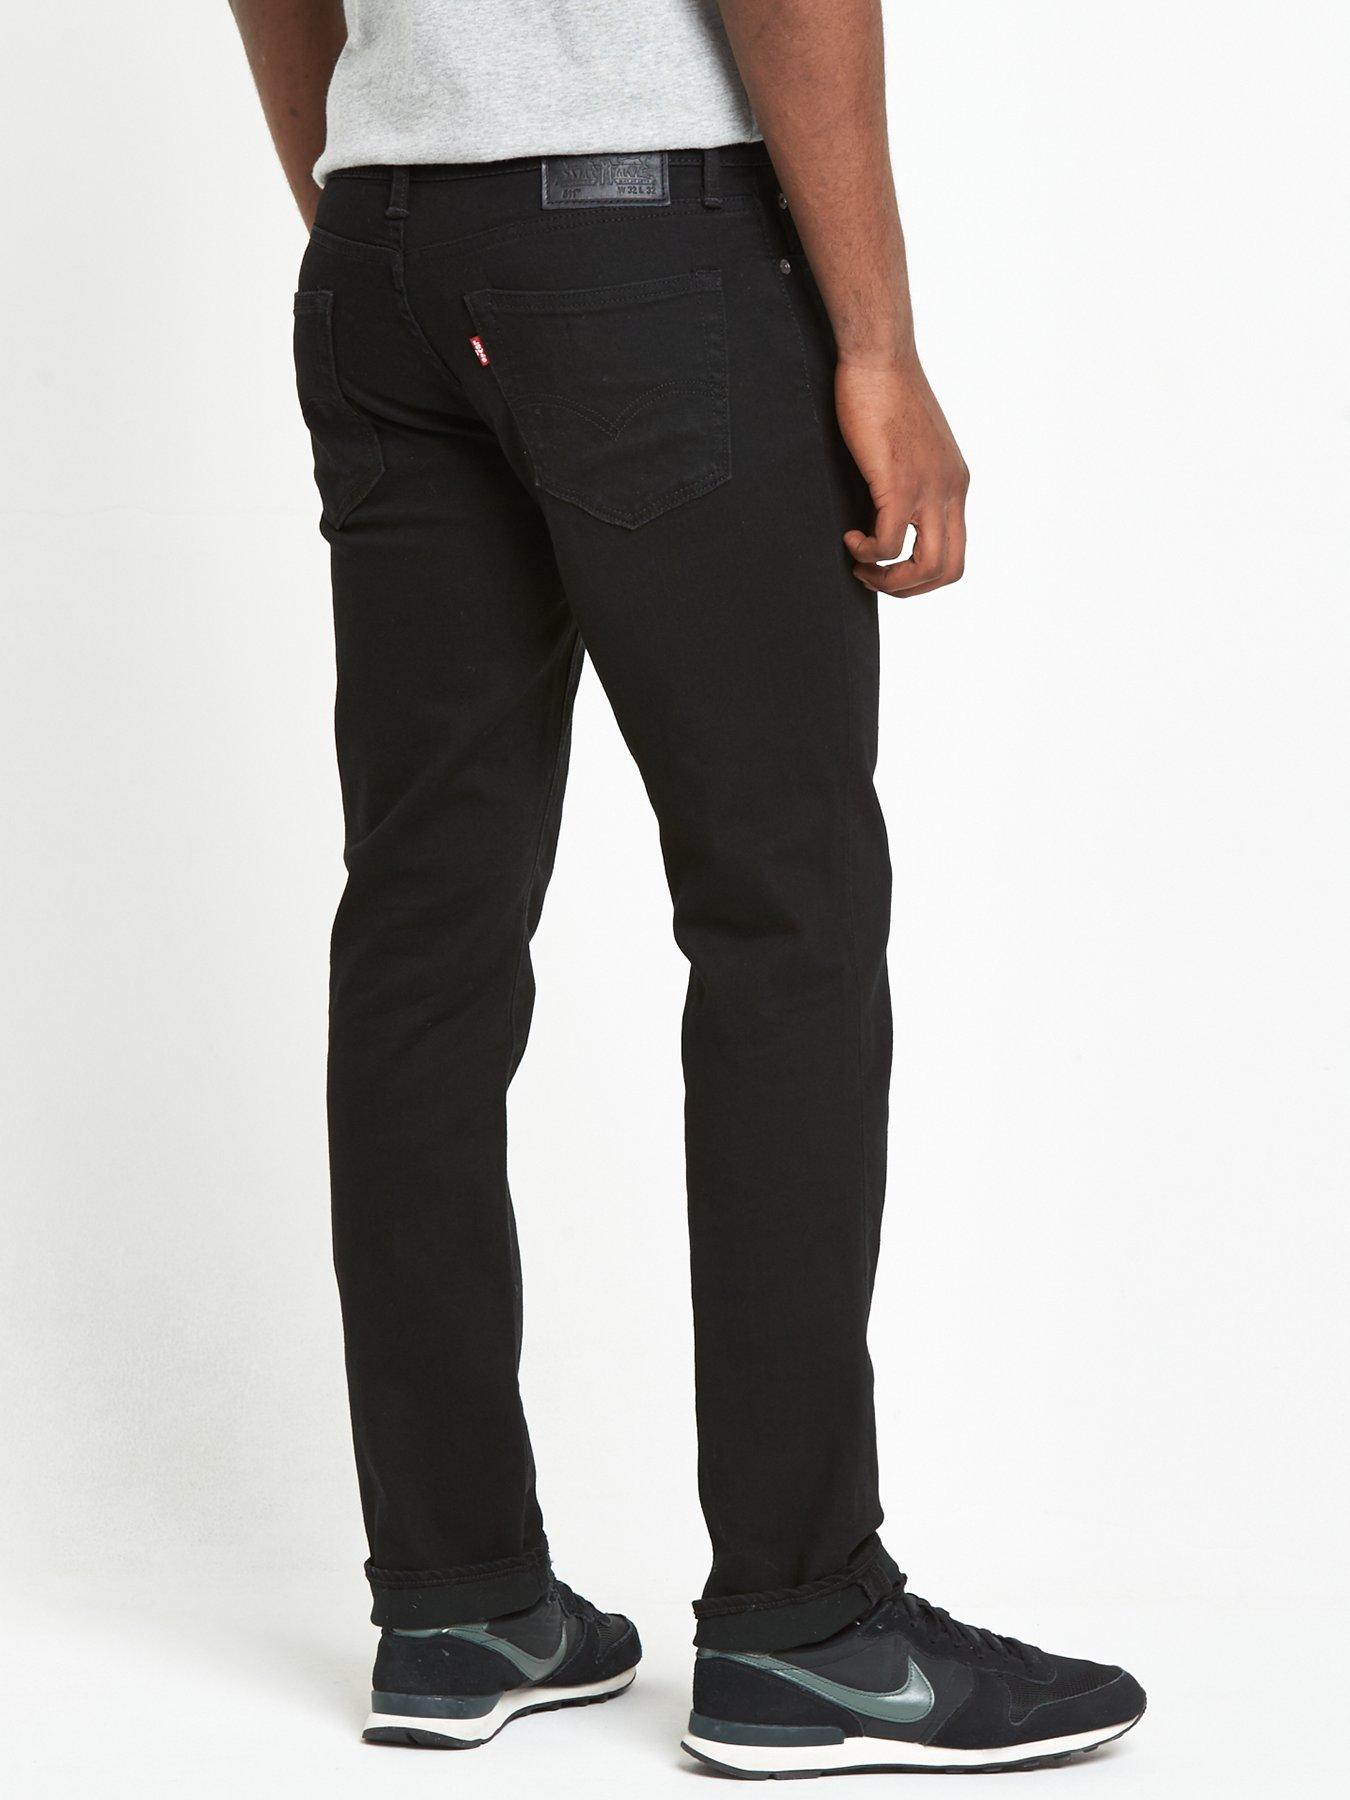 Levi's 511 Slim Fit Jeans - Black 